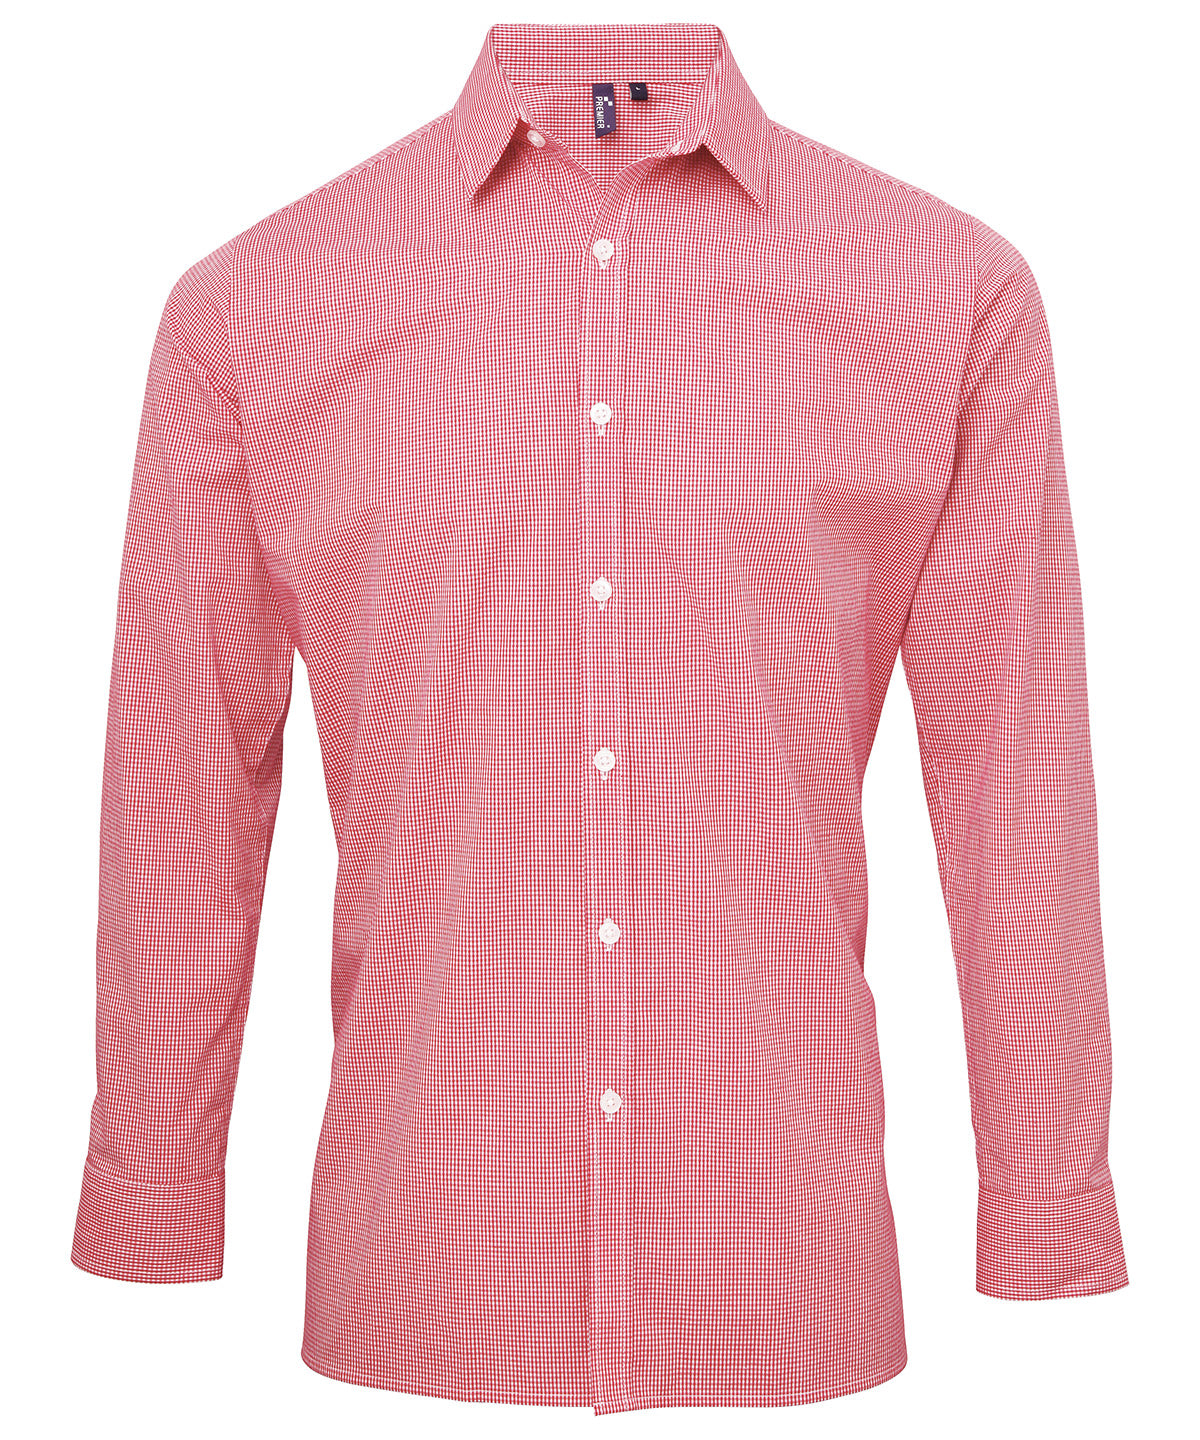 Bolir - Microcheck (Gingham) Long Sleeve Cotton Shirt